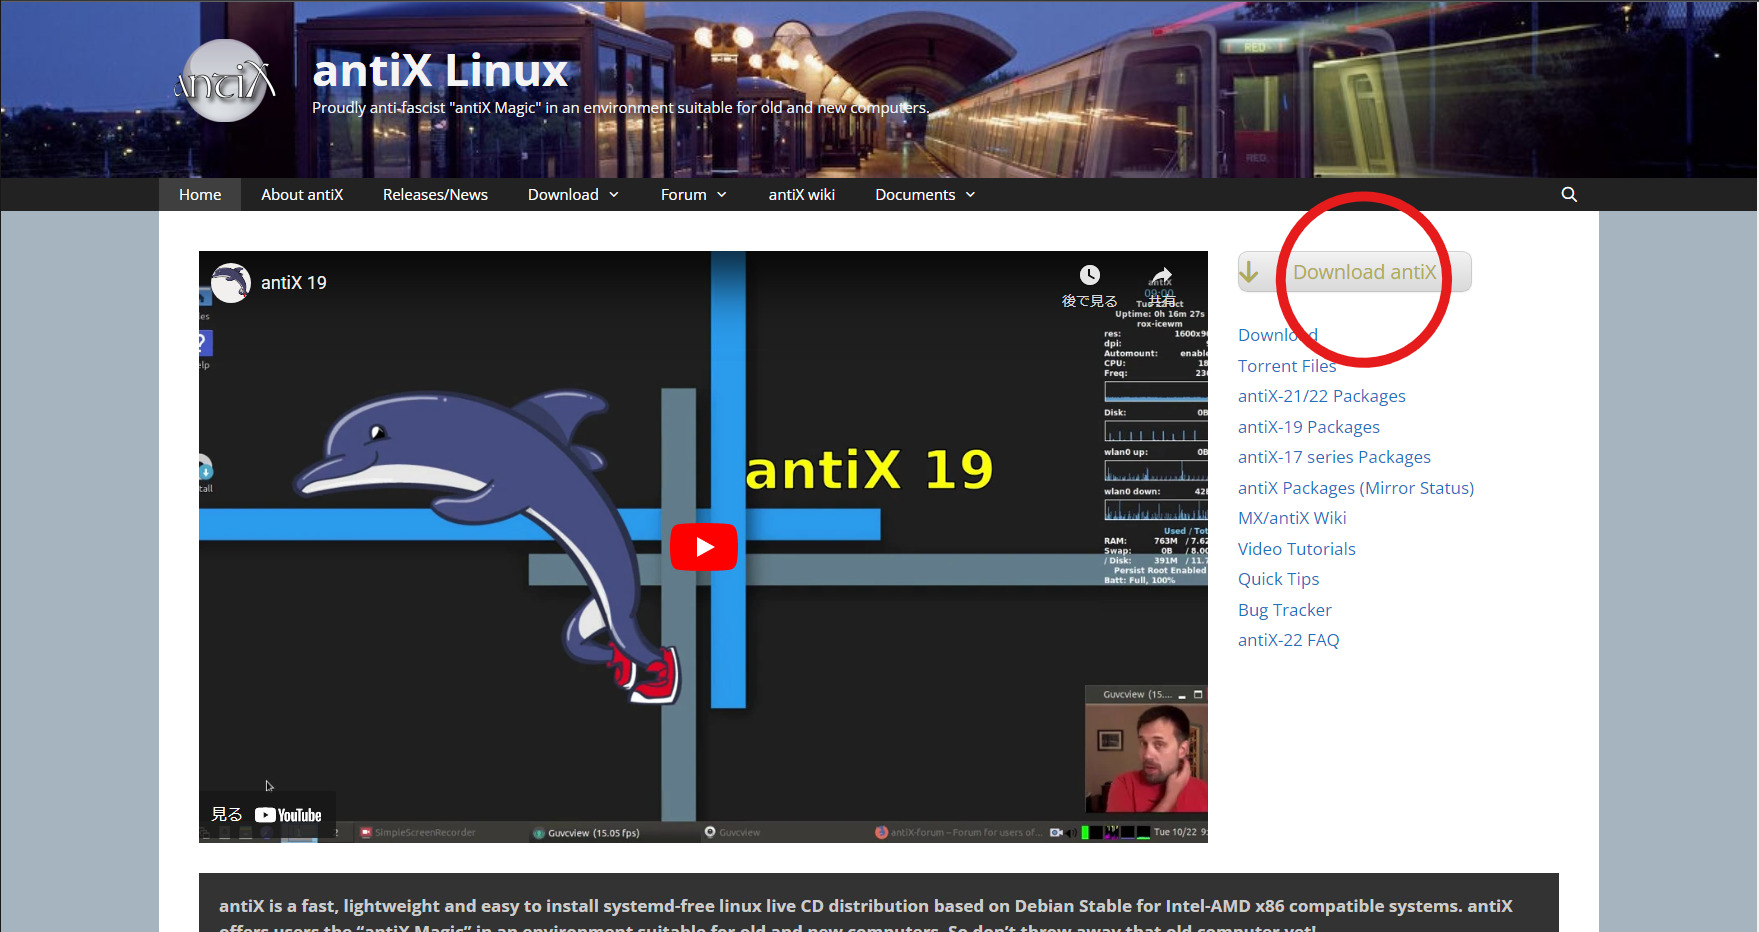 aniX Linuxのウェブサイトのキャプチャ